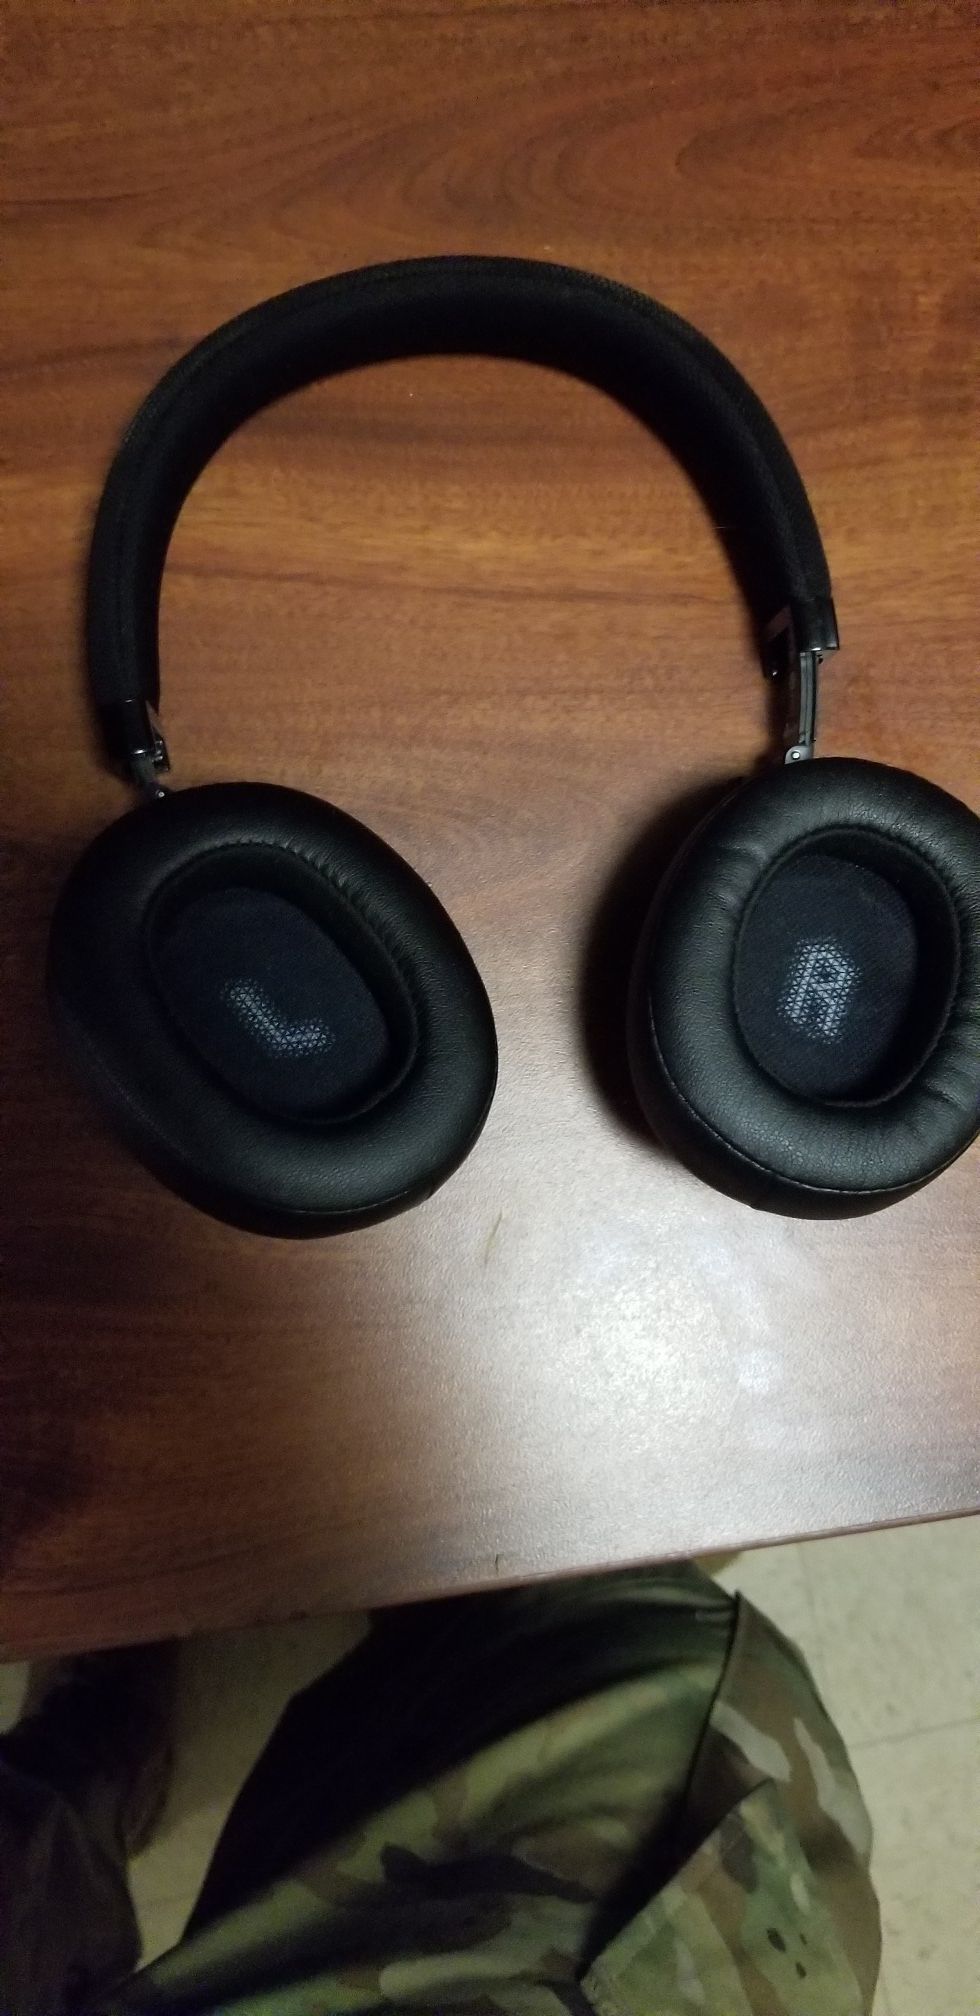 JBL e series headphones worth $100 selling for $70